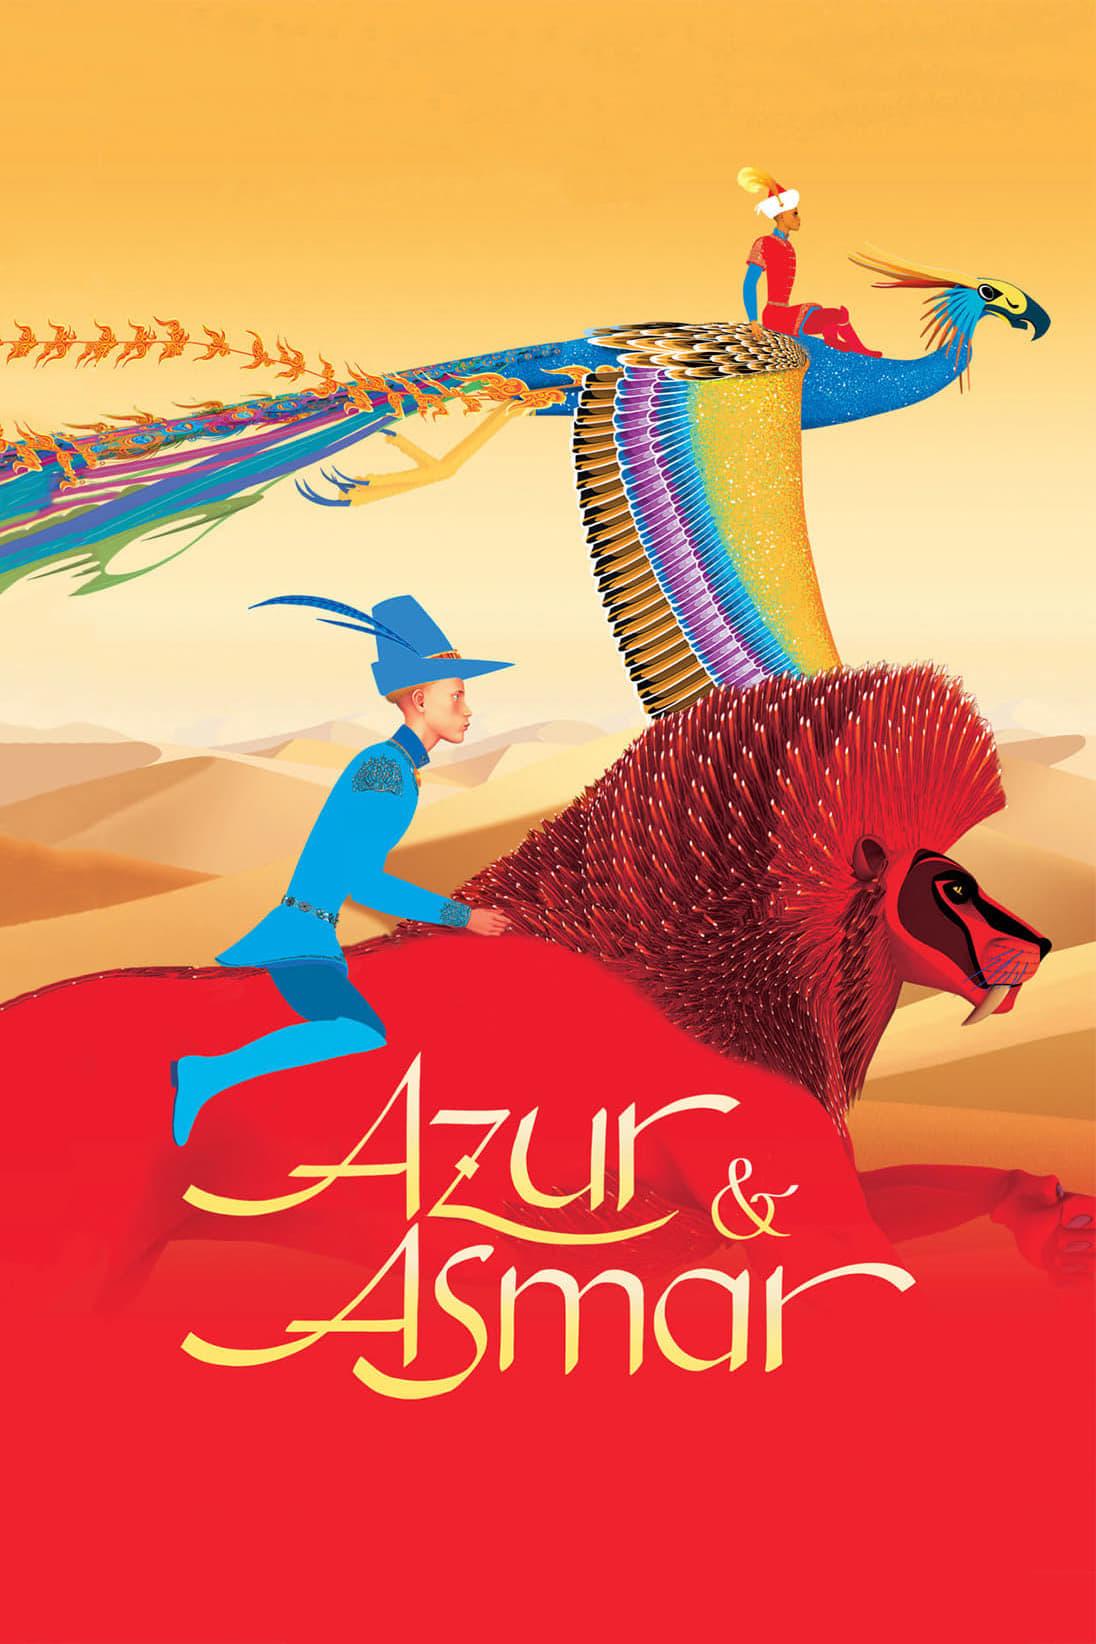 Affiche du film Azur et Asmar